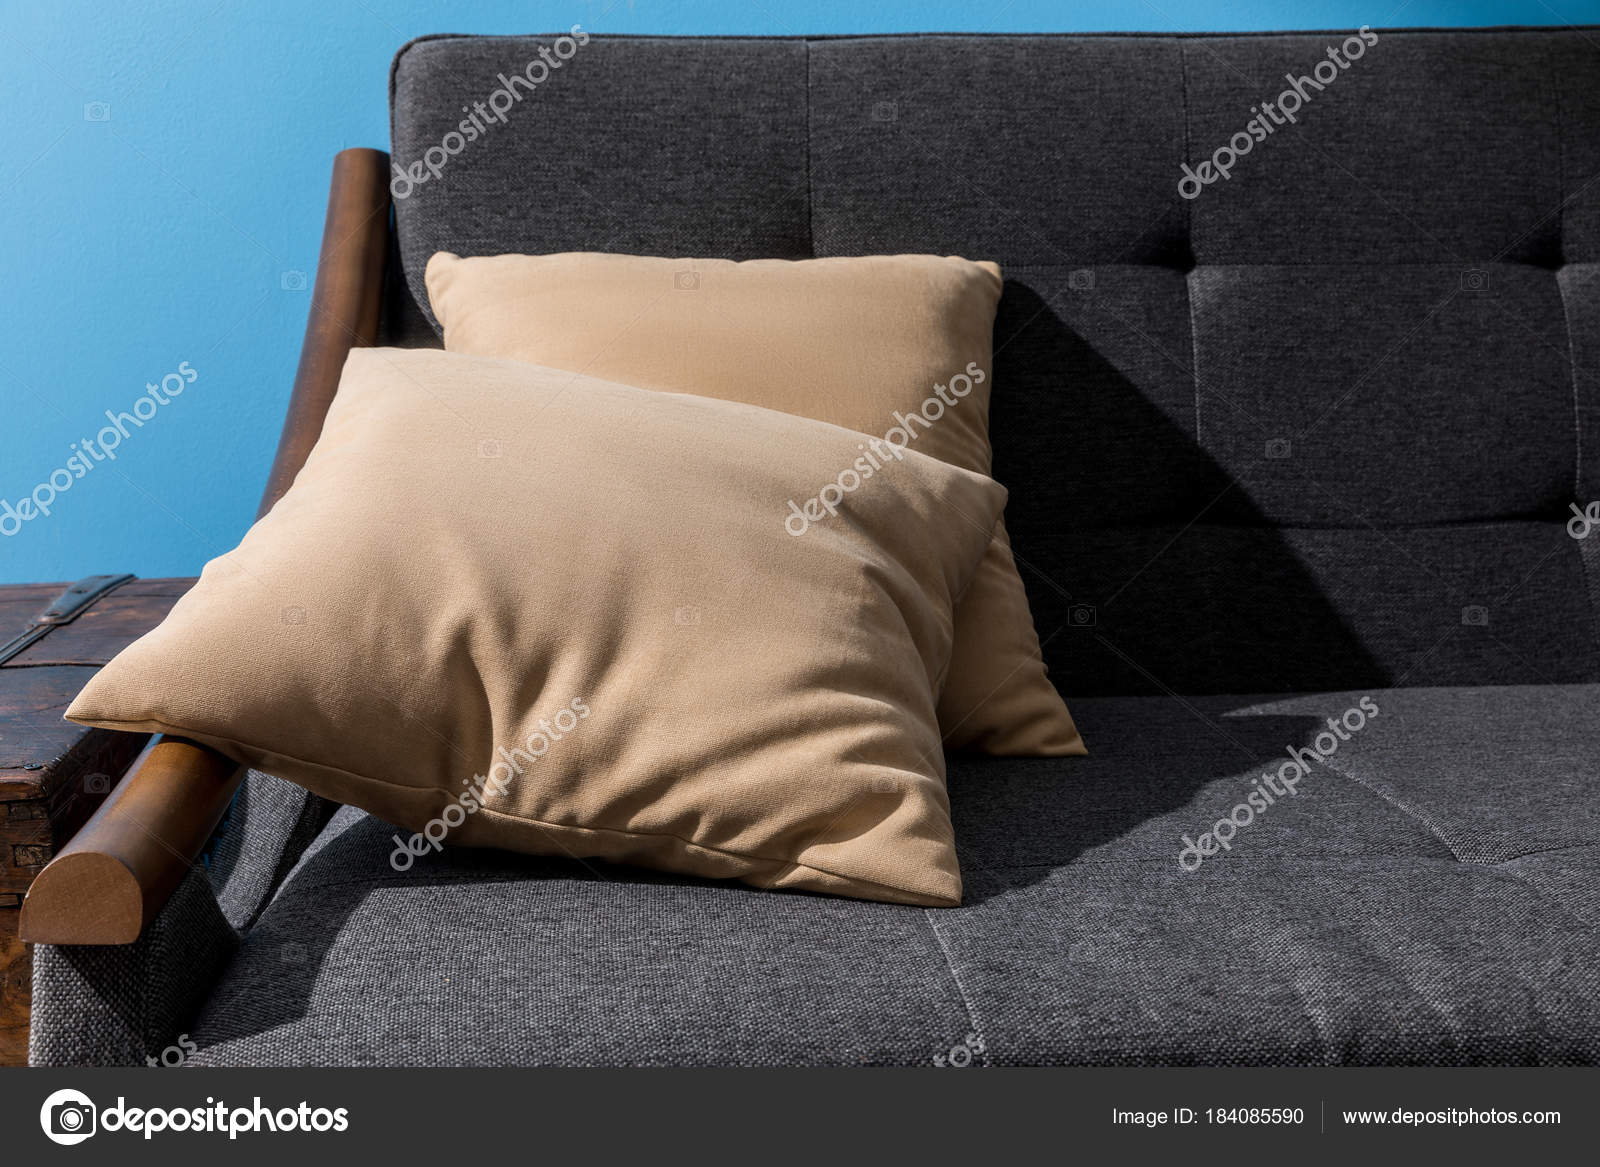 https://st3.depositphotos.com/13349494/18408/i/1600/depositphotos_184085590-stock-photo-close-shot-pillows-lying-comfy.jpg